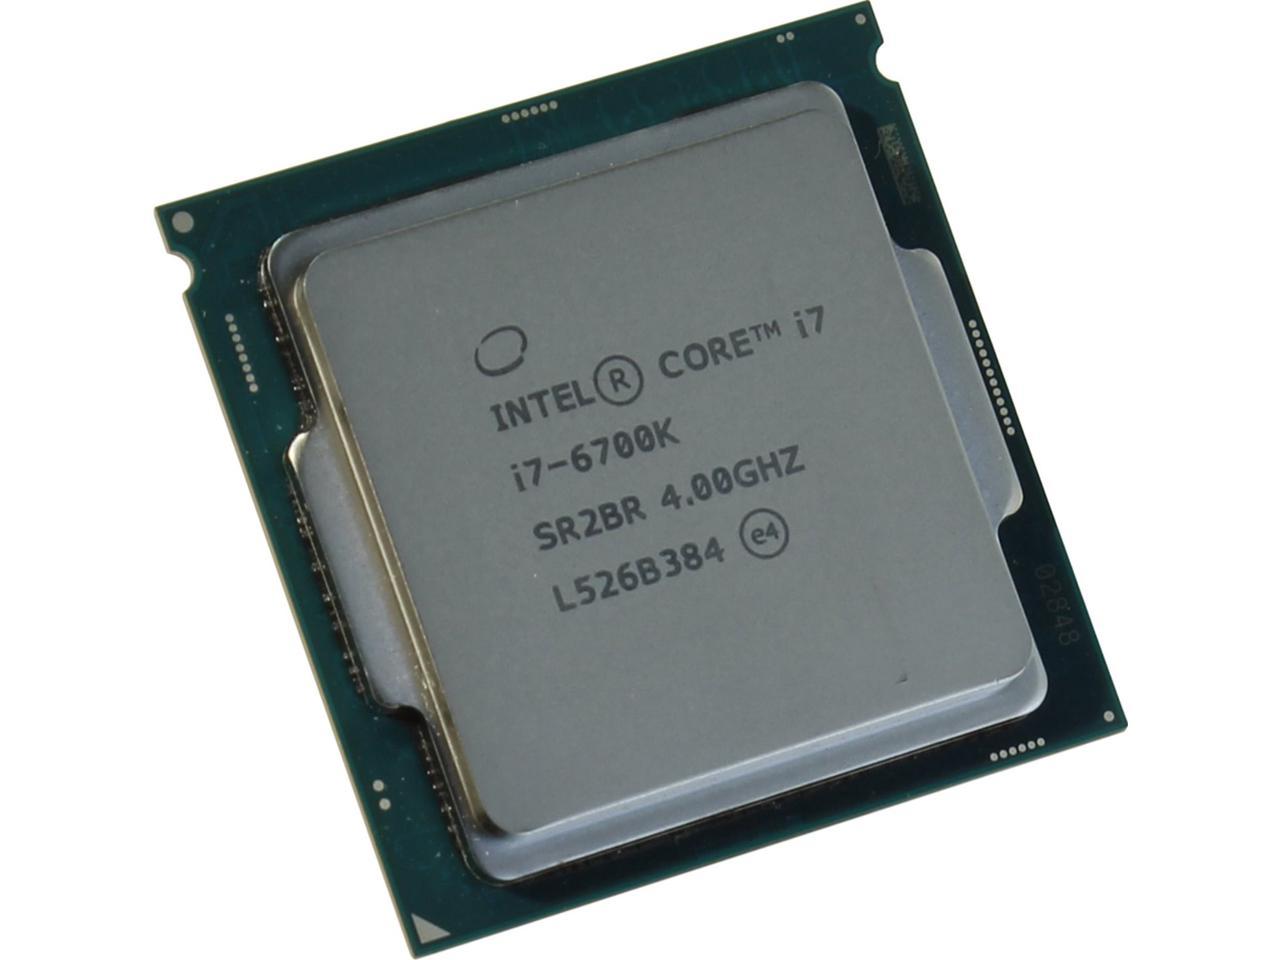 Intel 8 Mb Cach 3,40 Ghz Socket H4 Lga-1151-1 Mb Renewed Processore Core I7 I7-6700 Quad-core 4 Core 